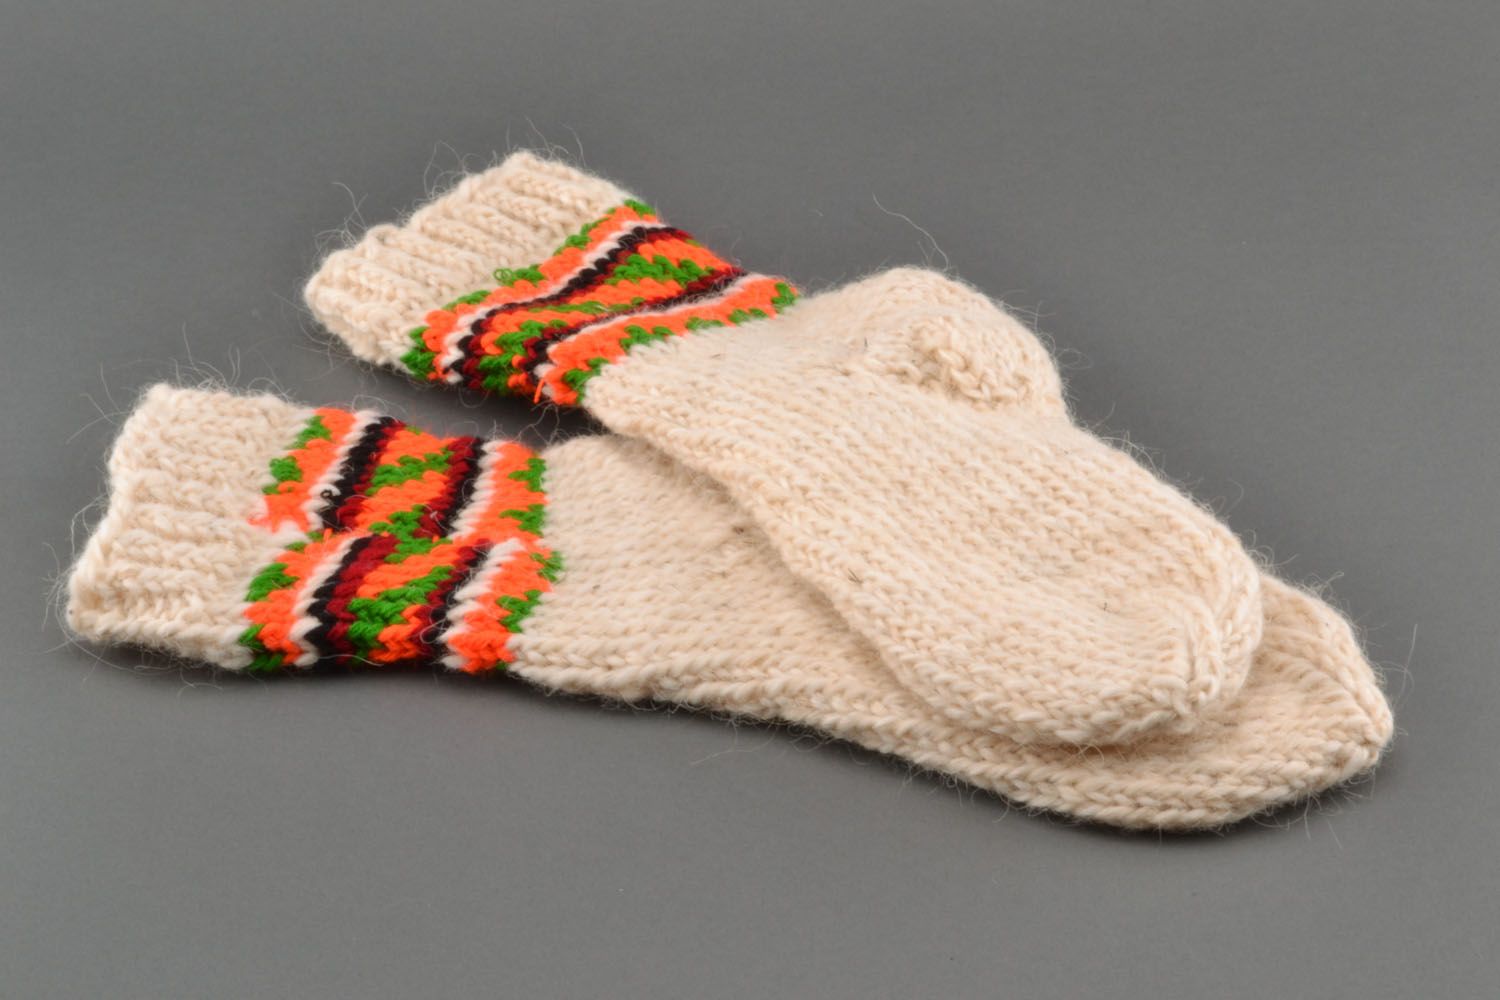 Homemade knitted woolen socks photo 4